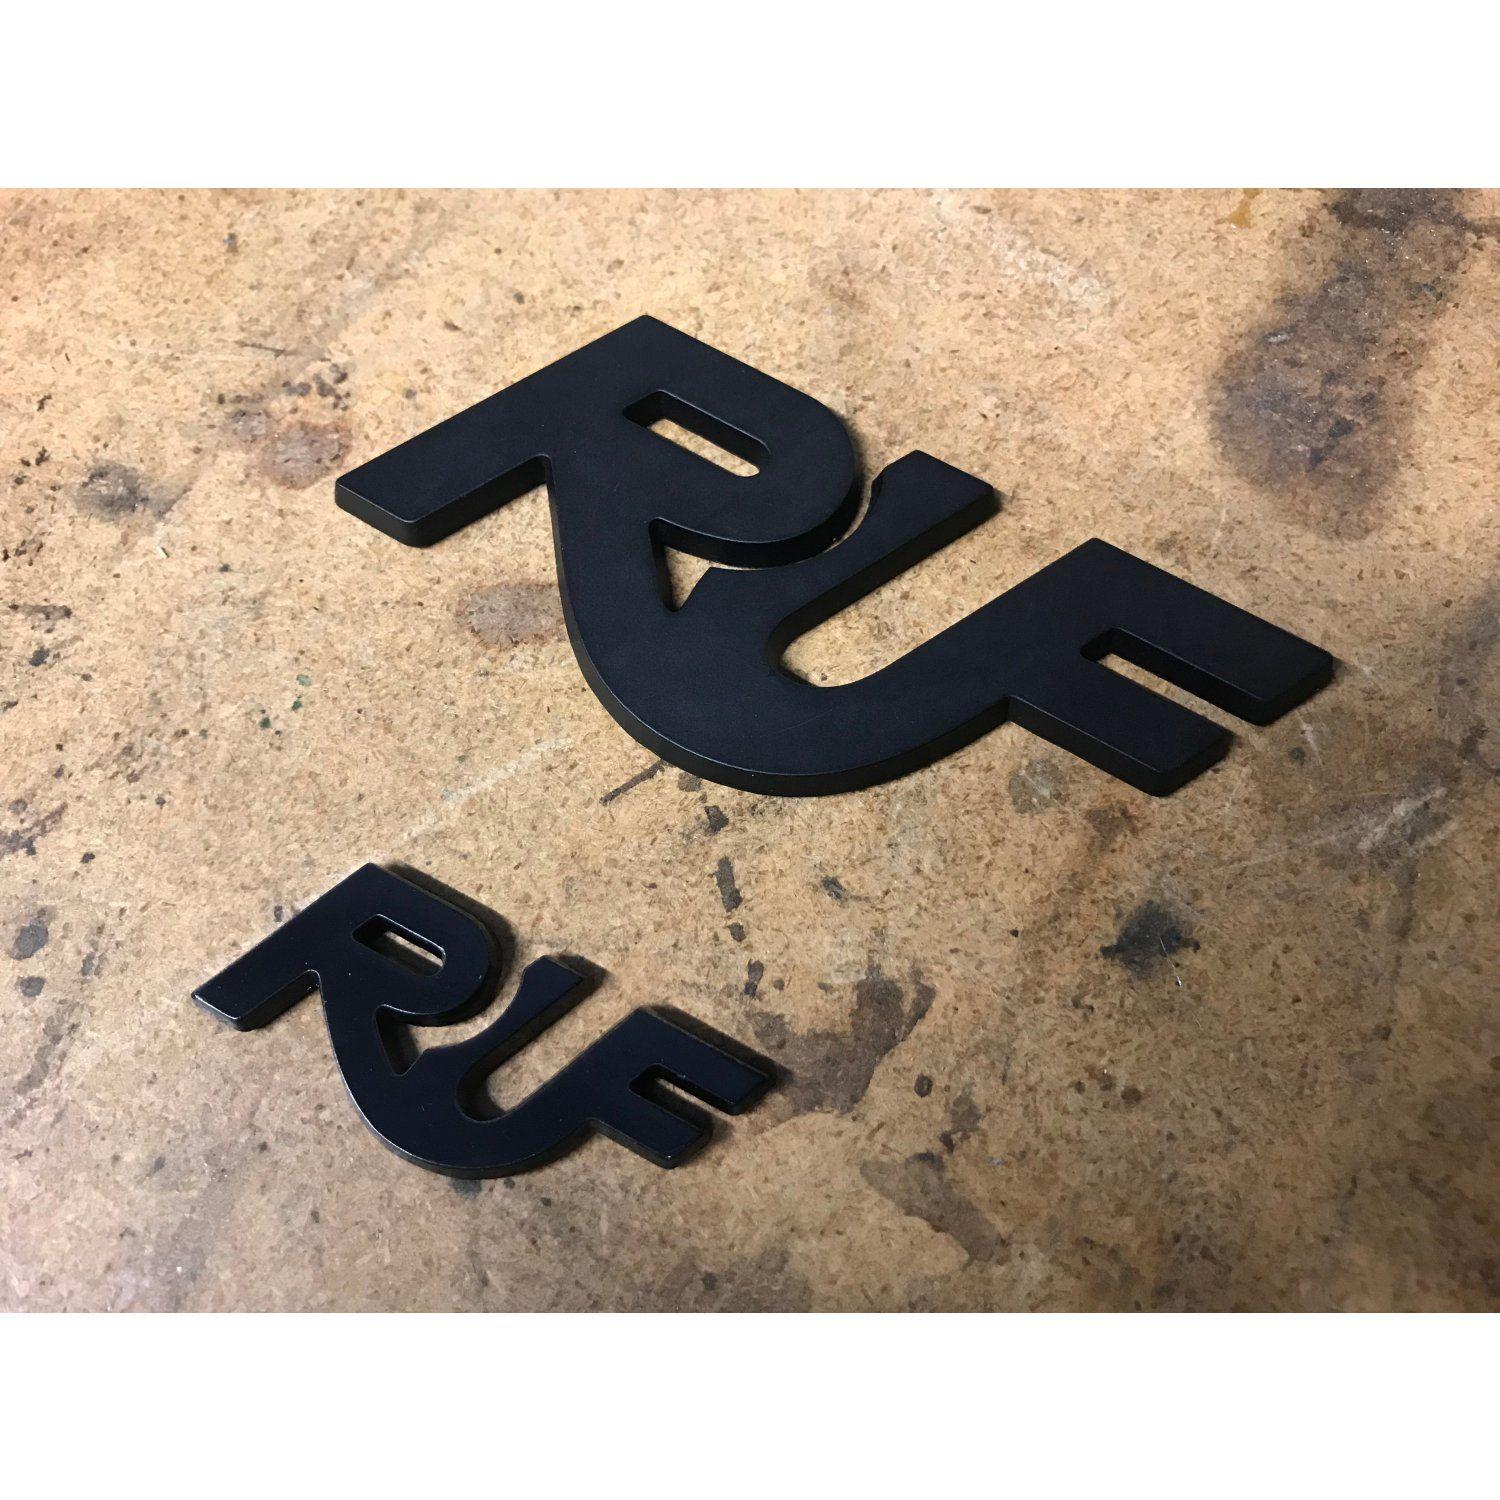 Ruf Porsche Logo - RUF Porsche Front and Rear Badge Emblems New | eBay